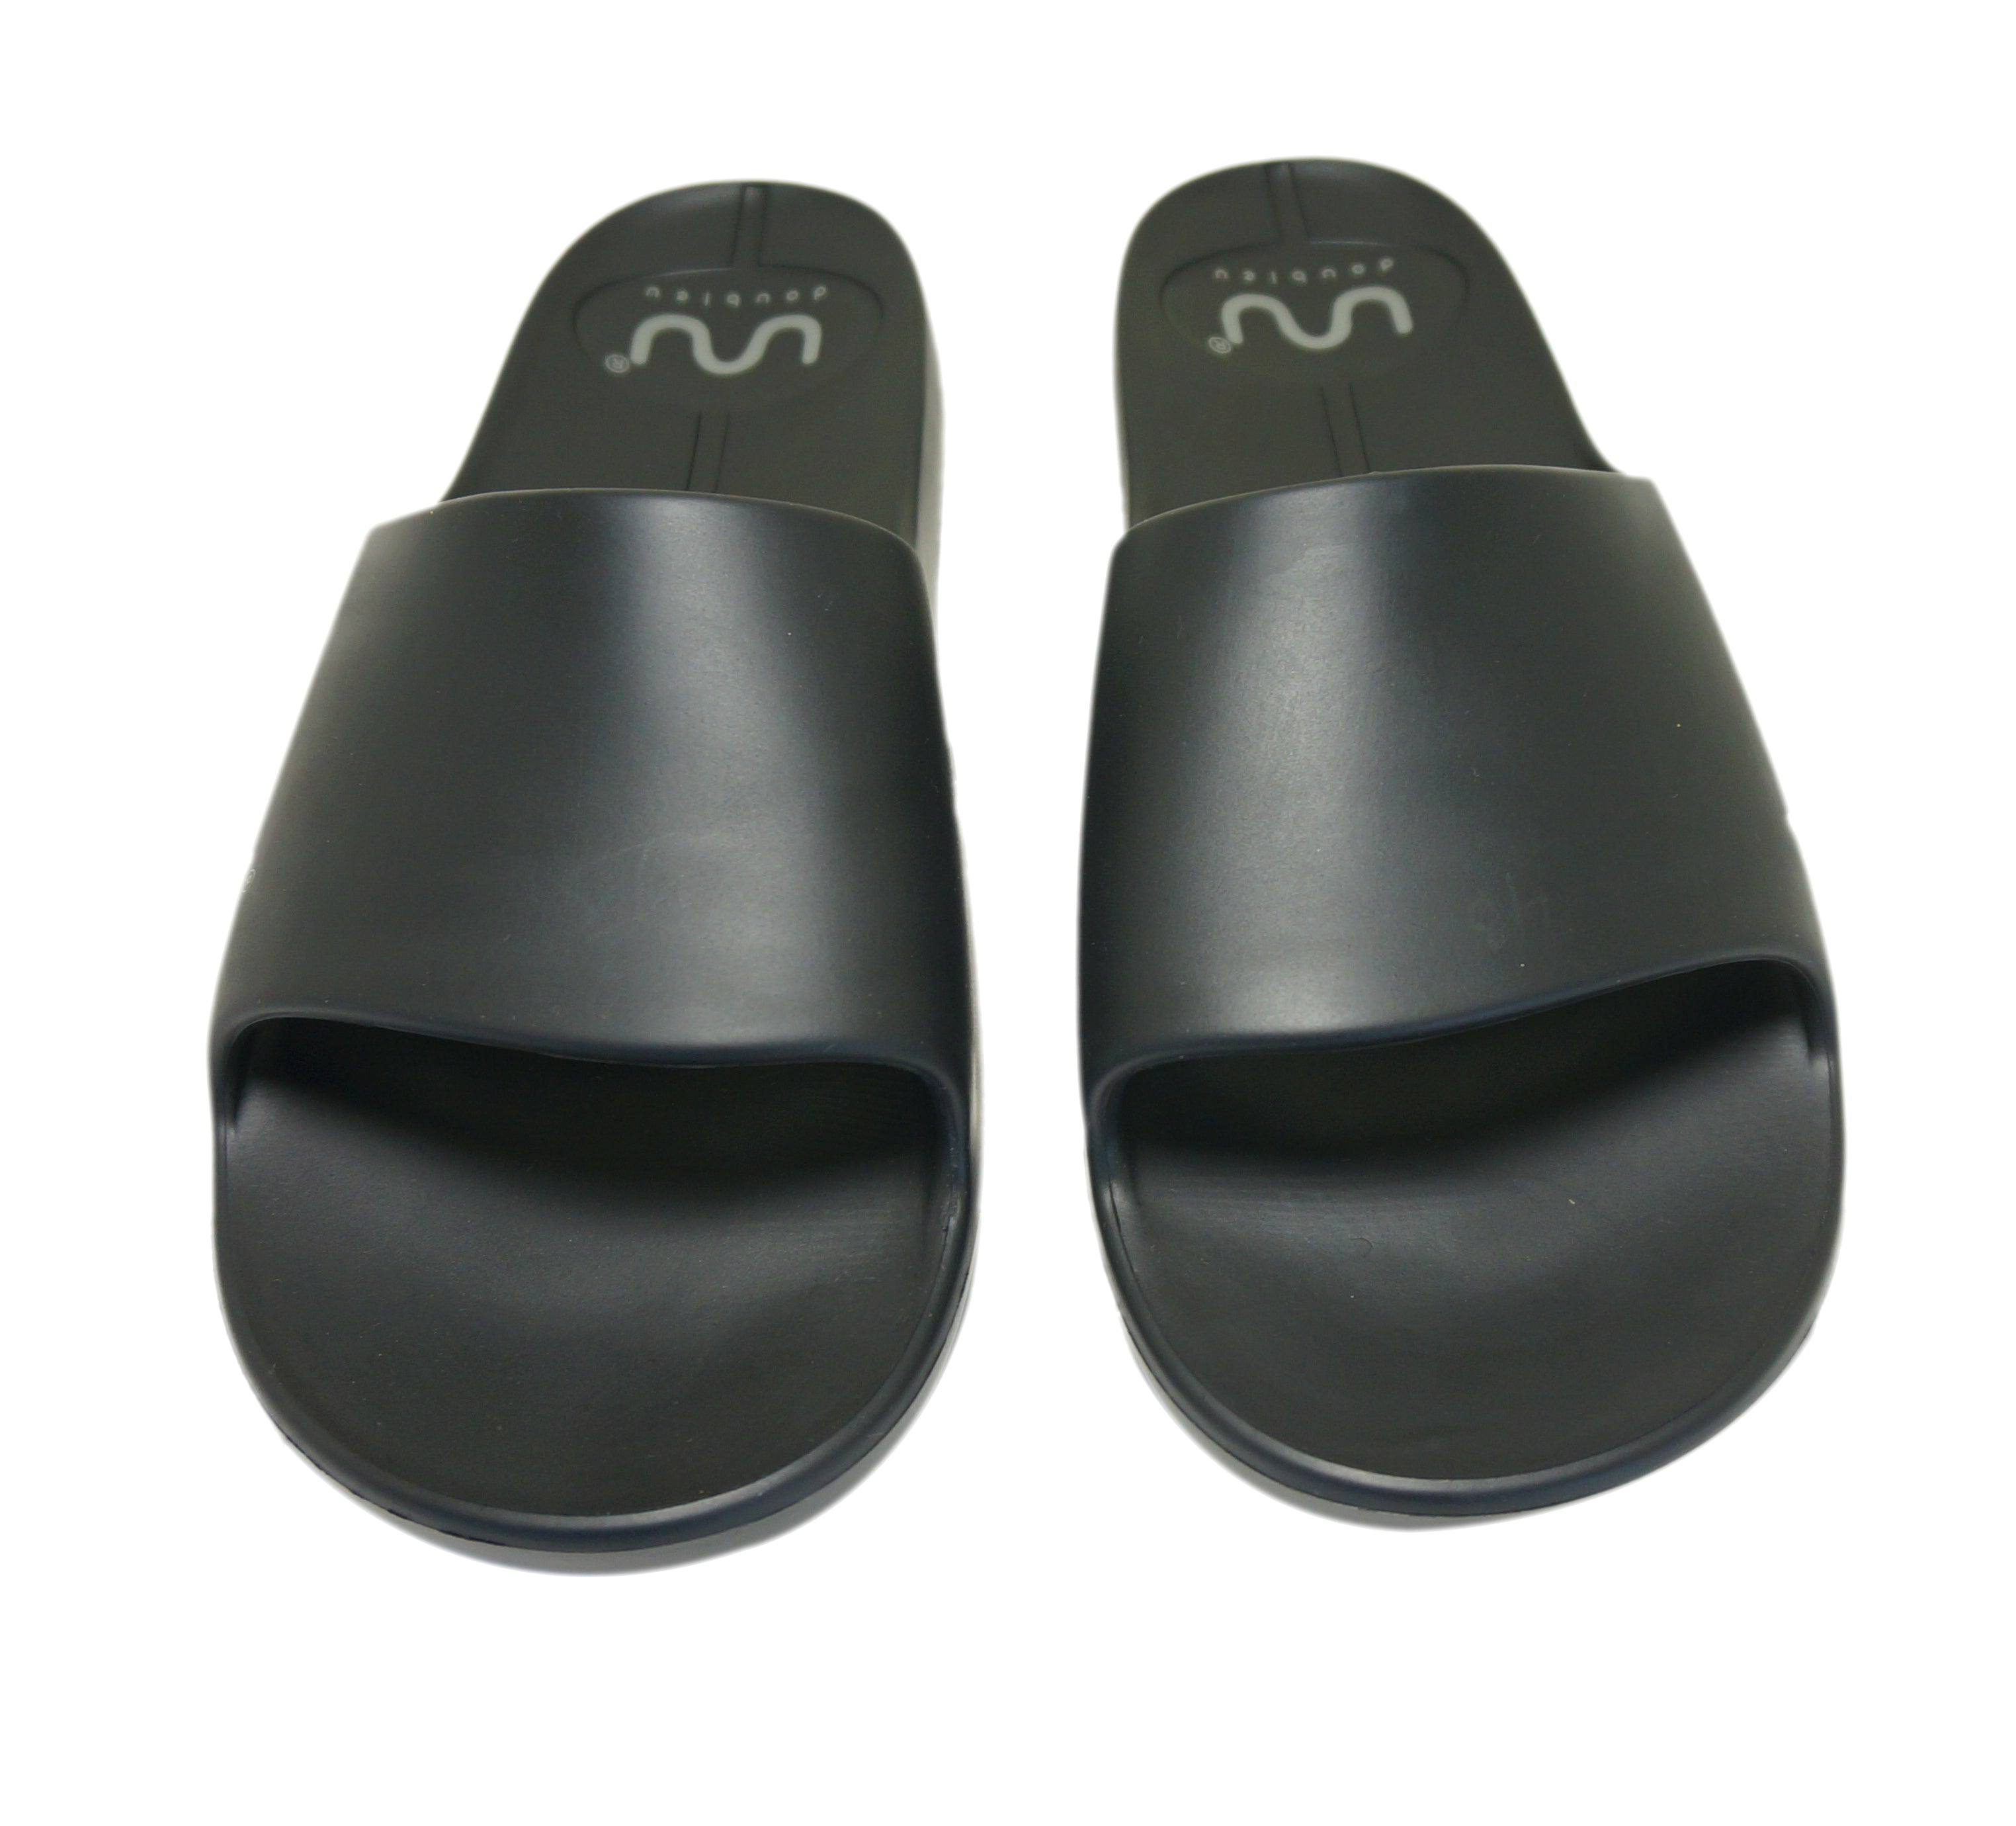 Doubleu Milano Women Slipper Comfortable & Light Weight Recovery Footwear (BLACK)